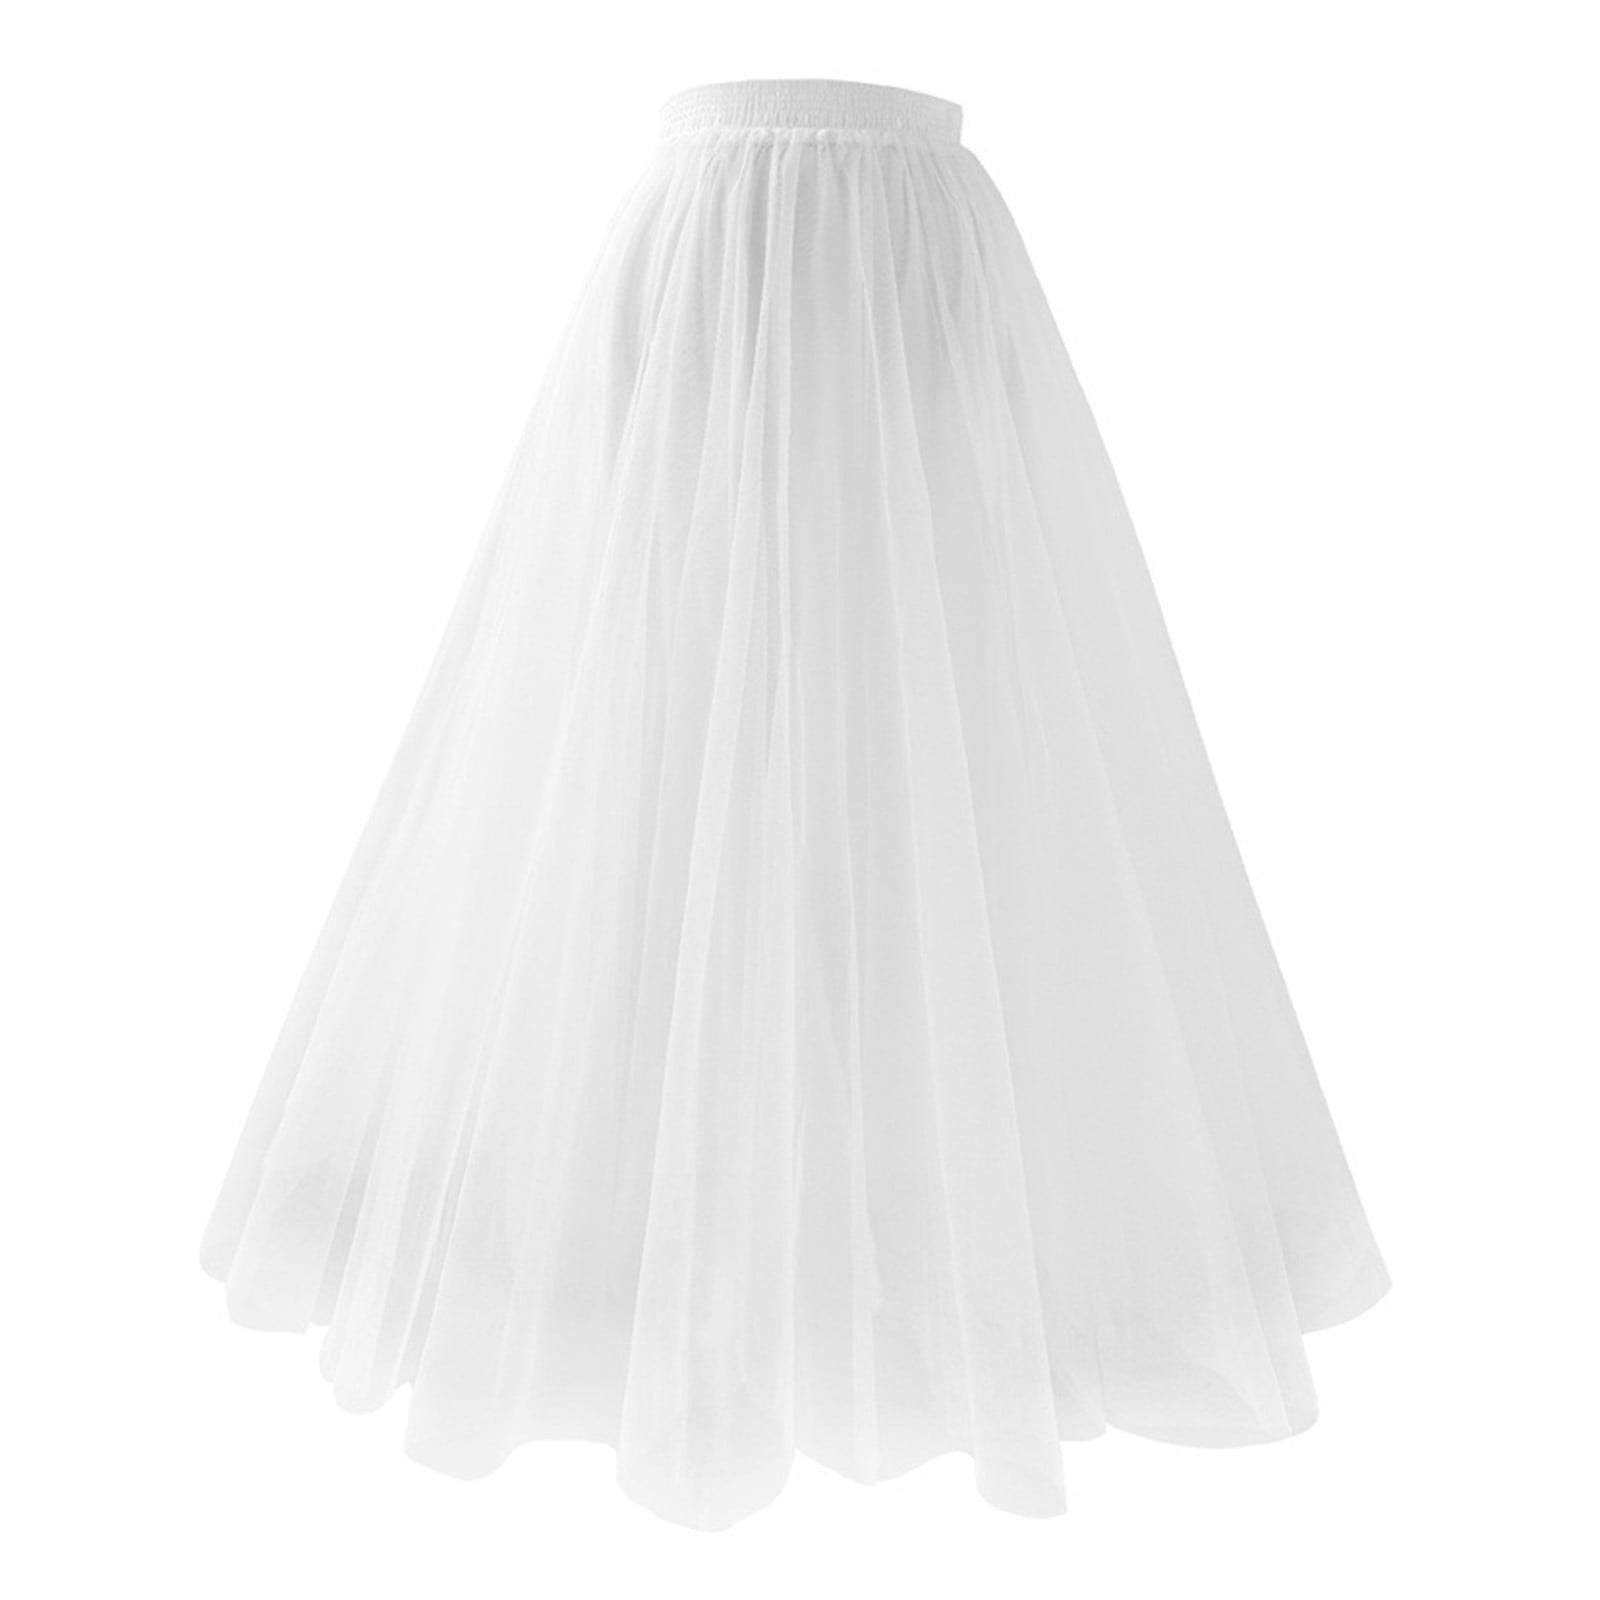 pure white soft mesh fabric fine mesh tulle high quality for wedding dress  tutu skirt petticoat 160cm width 10meters/lot - AliExpress